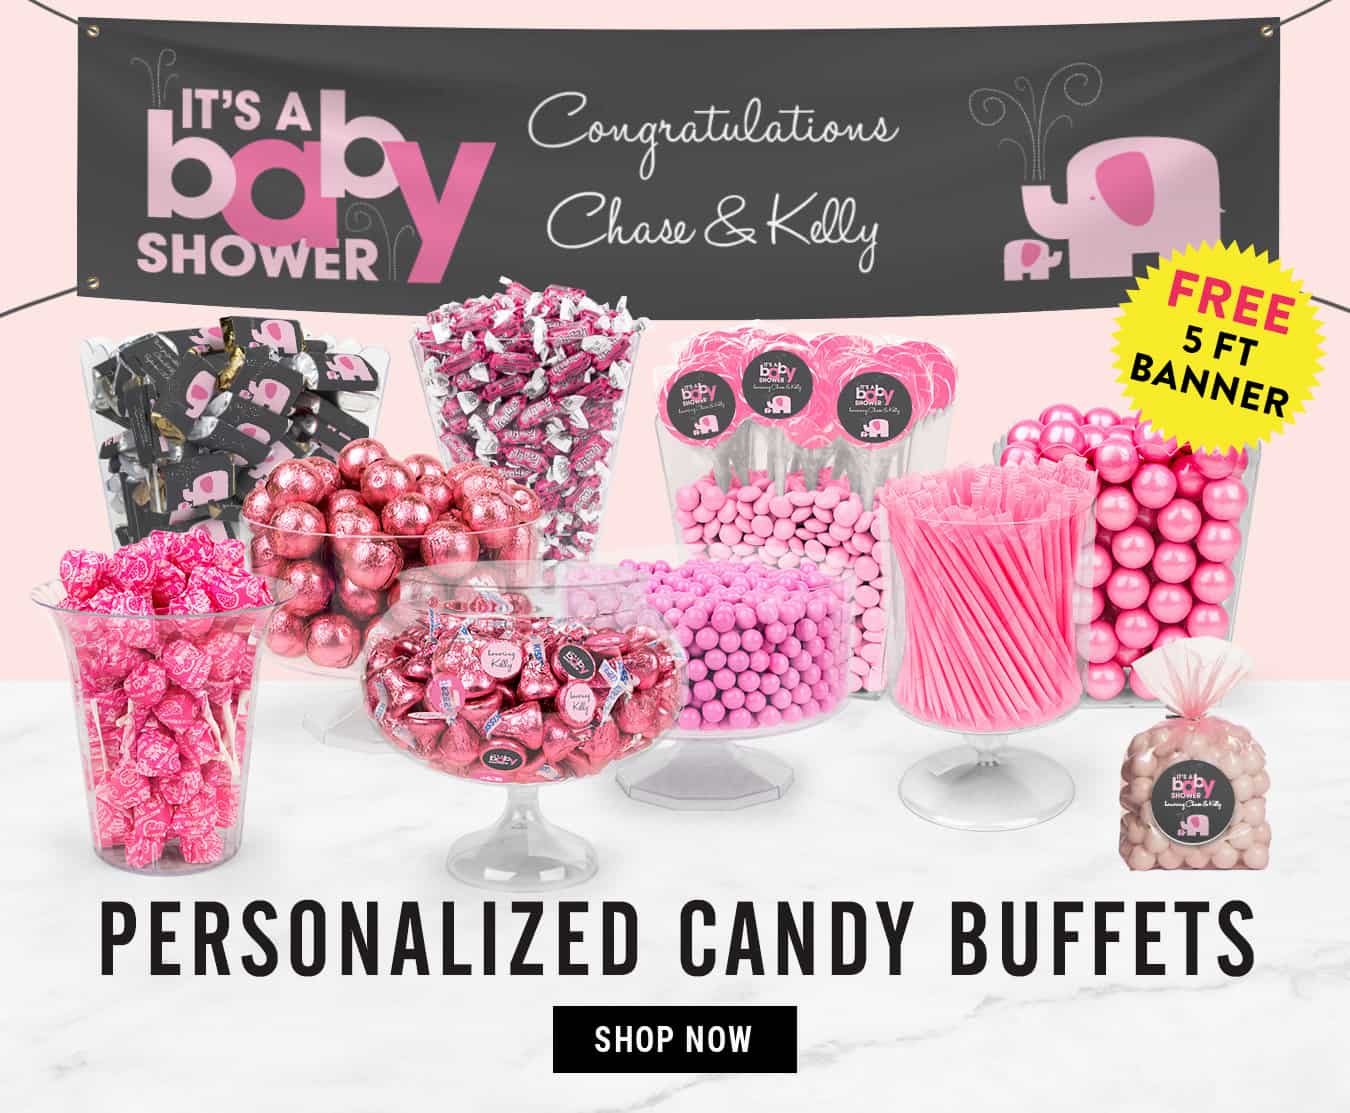 Personalized Candy Buffets